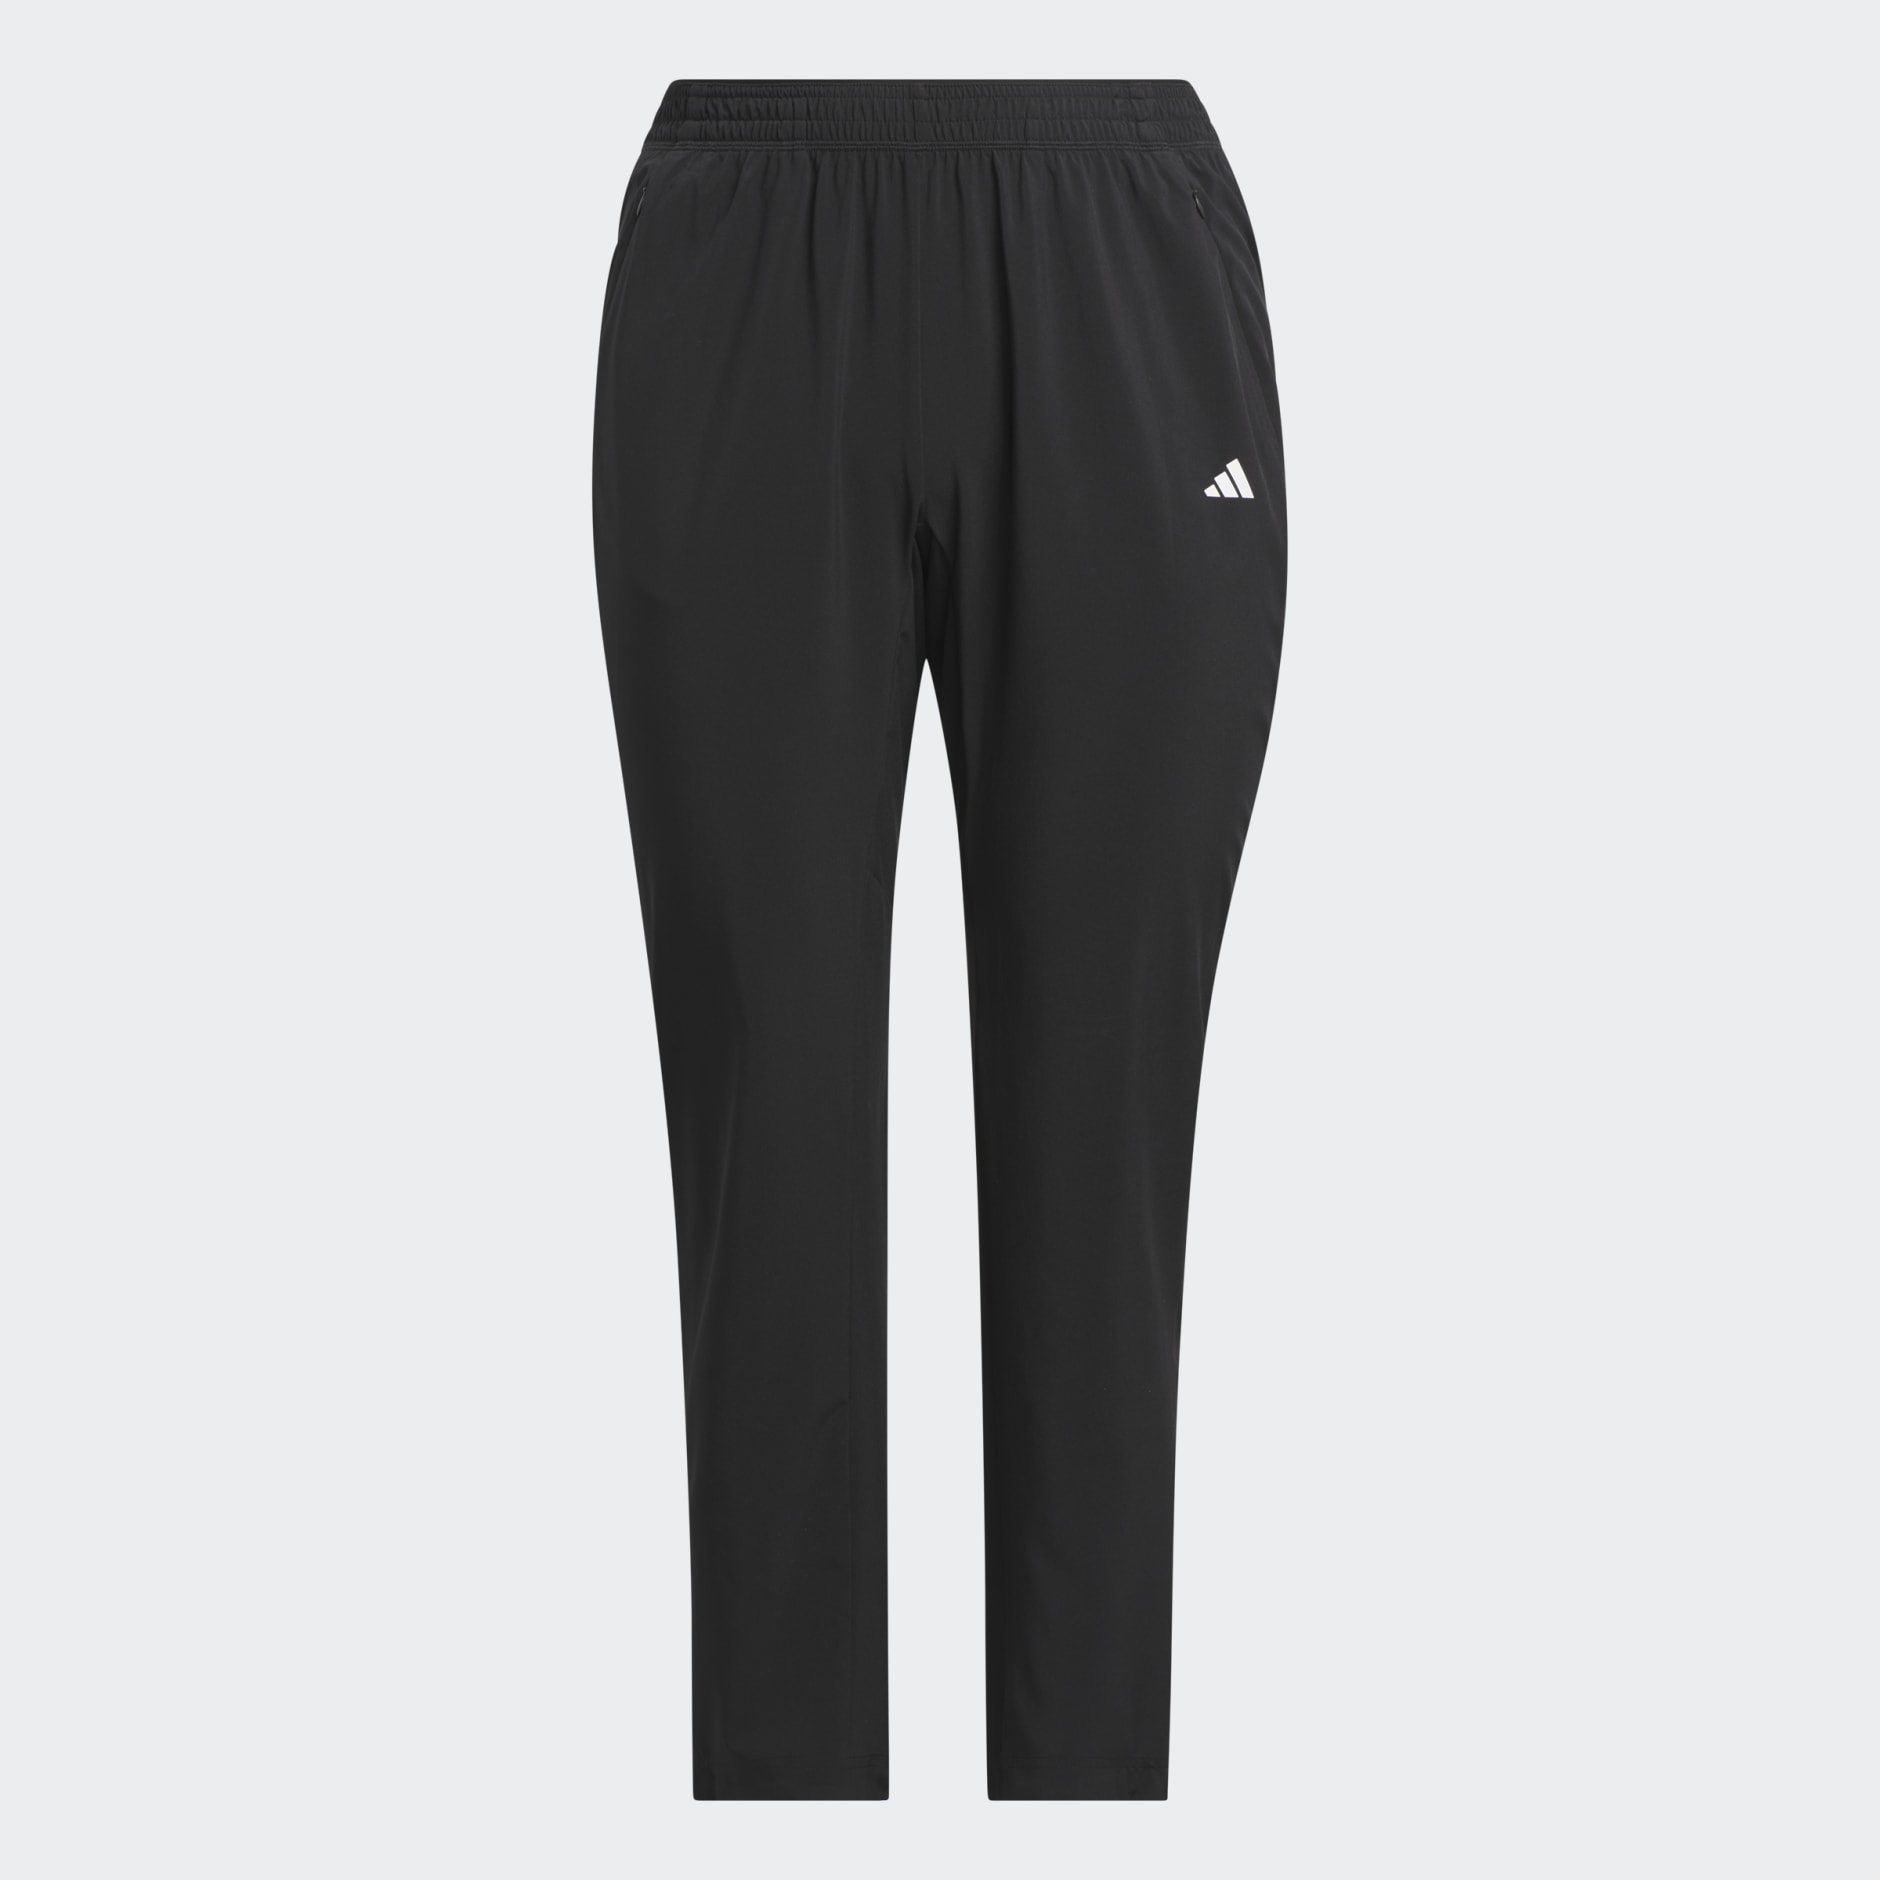 Women's jogging trousers, For trainings or as loungewear